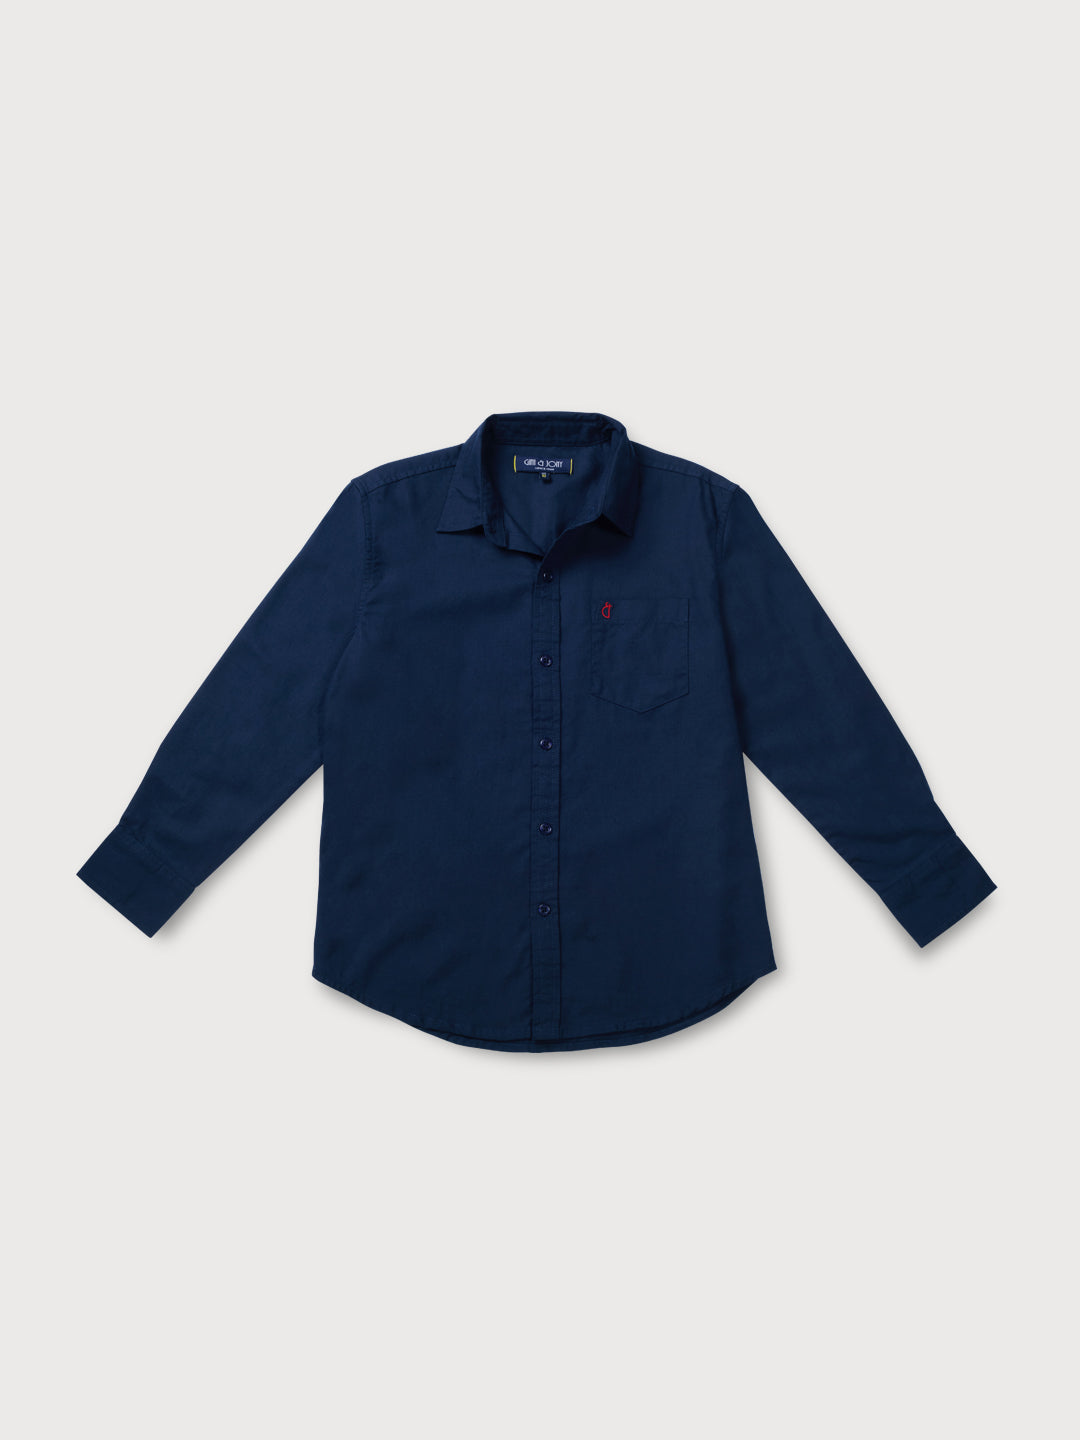 Boys Navy Blue Solid Woven Shirt